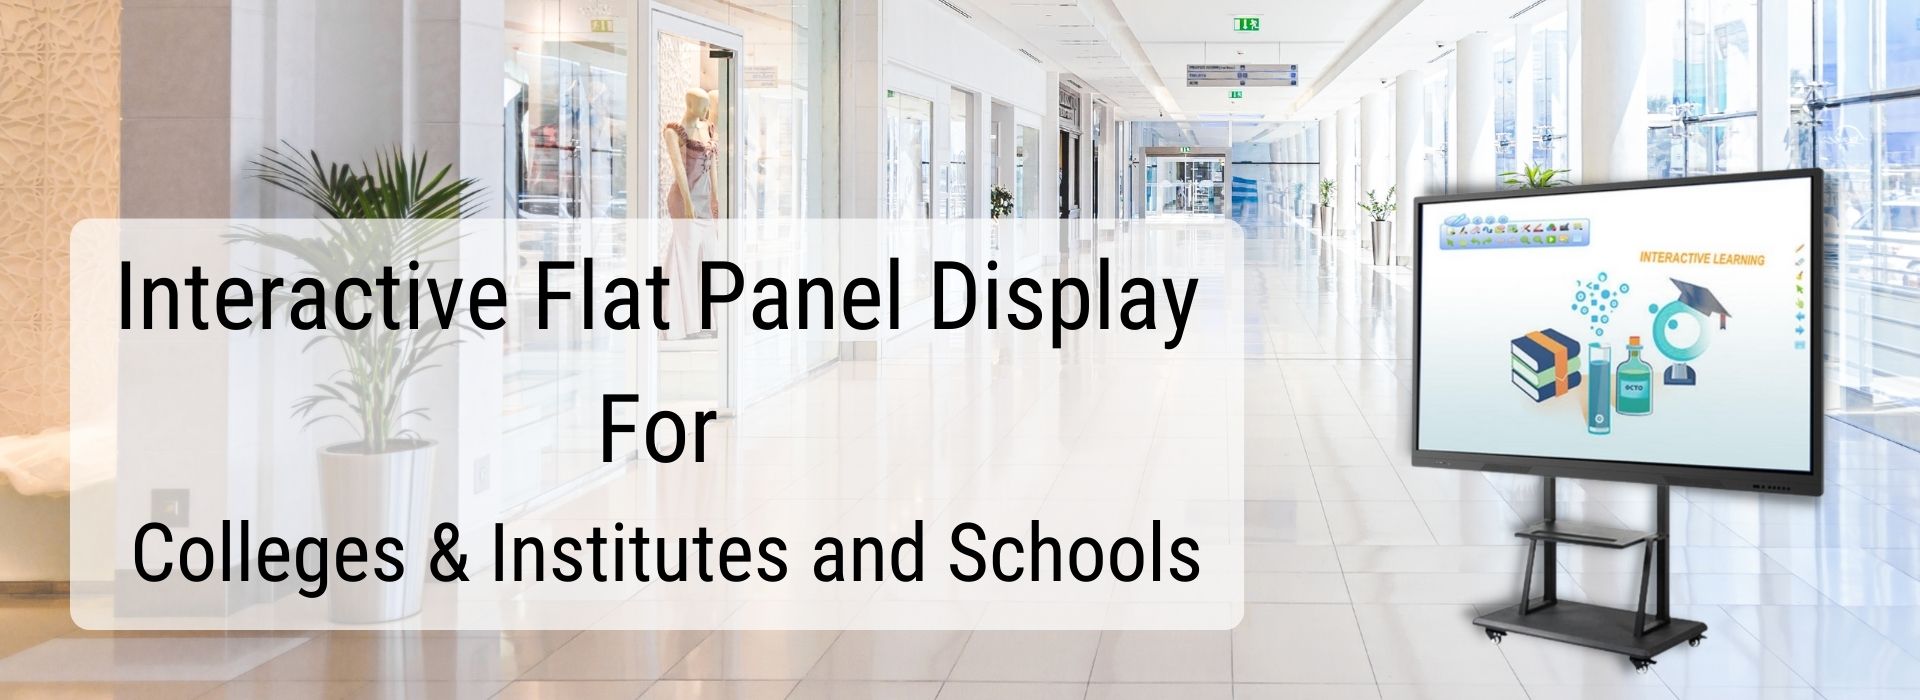 Interactive Flat Panel Display